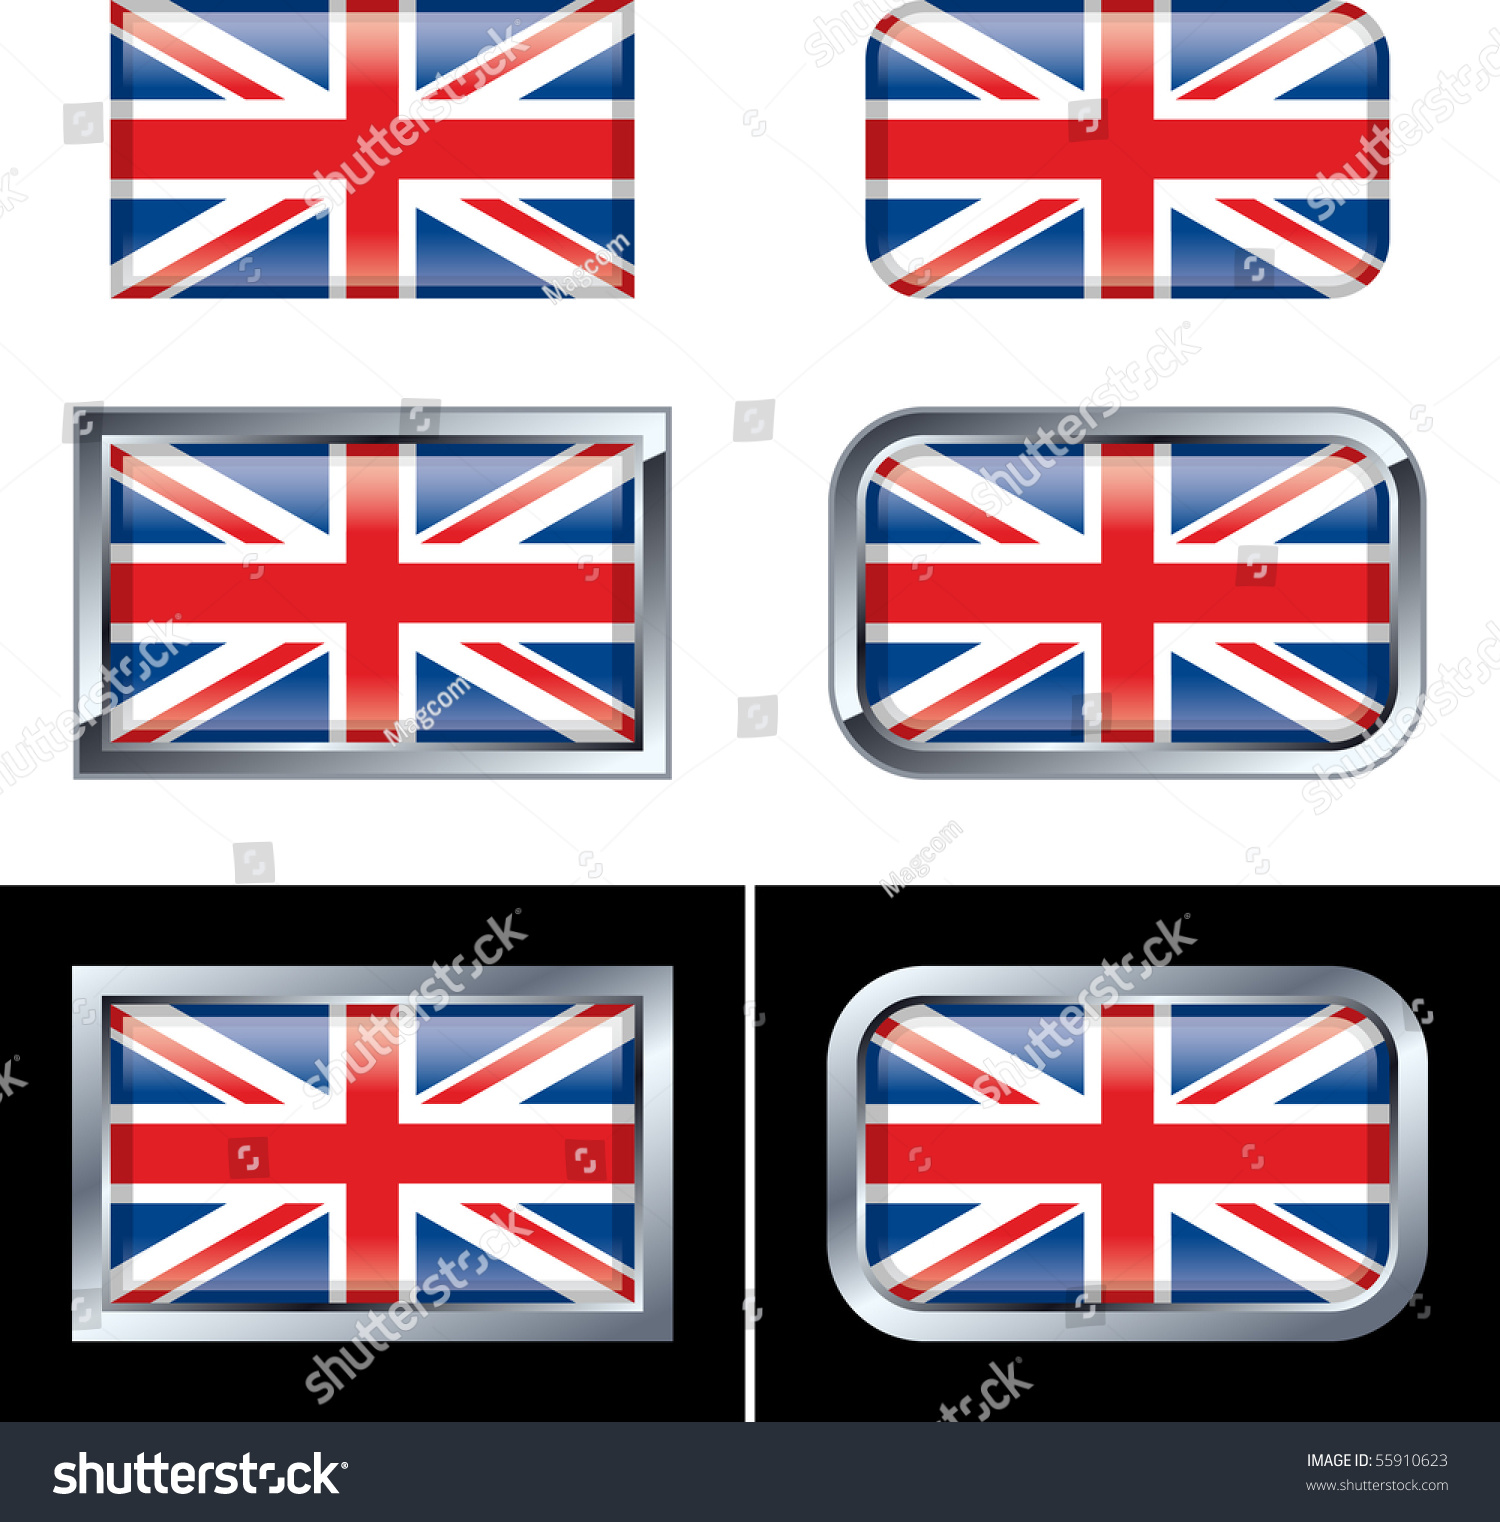 British Flag Buttons Stock Vector Illustration 55910623 : Shutterstock